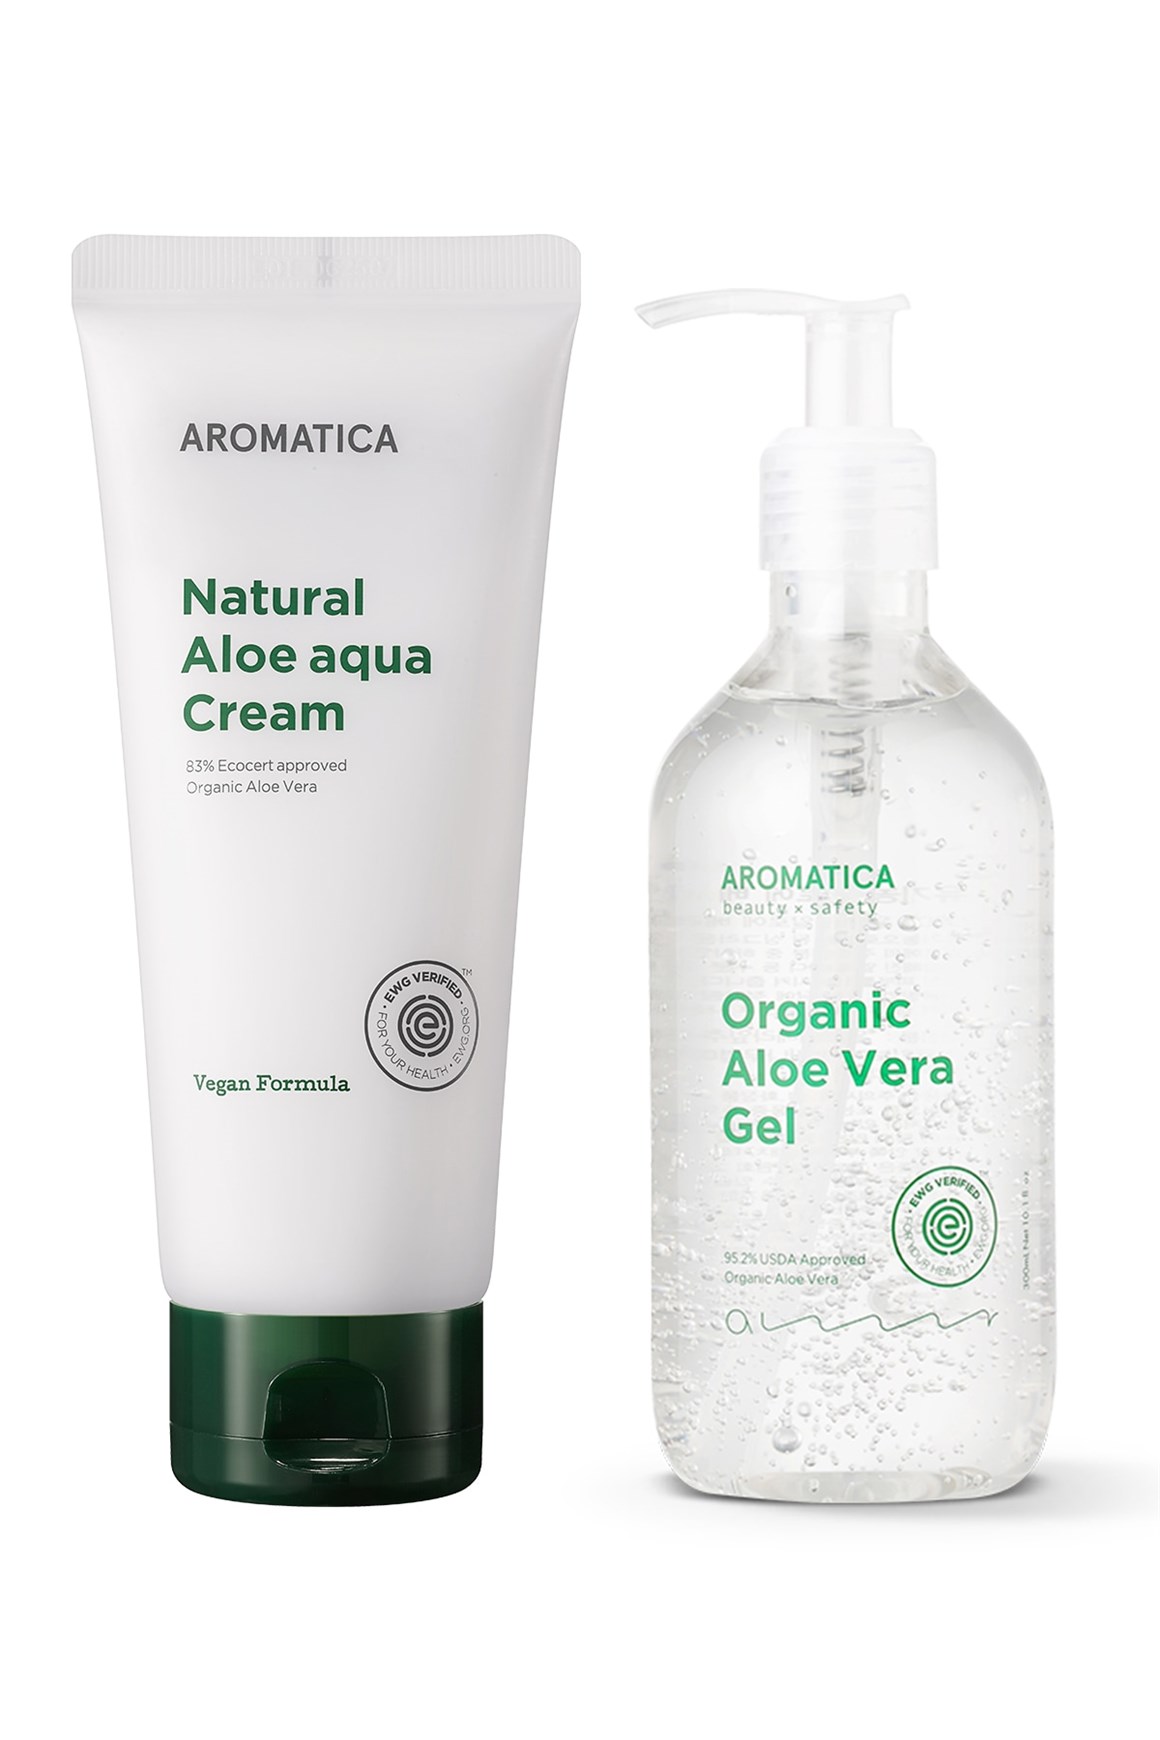 Aromatica 95% Organic Aloe Vera Gel & Natural Aloe Aqua Cream | Justin  Beauty